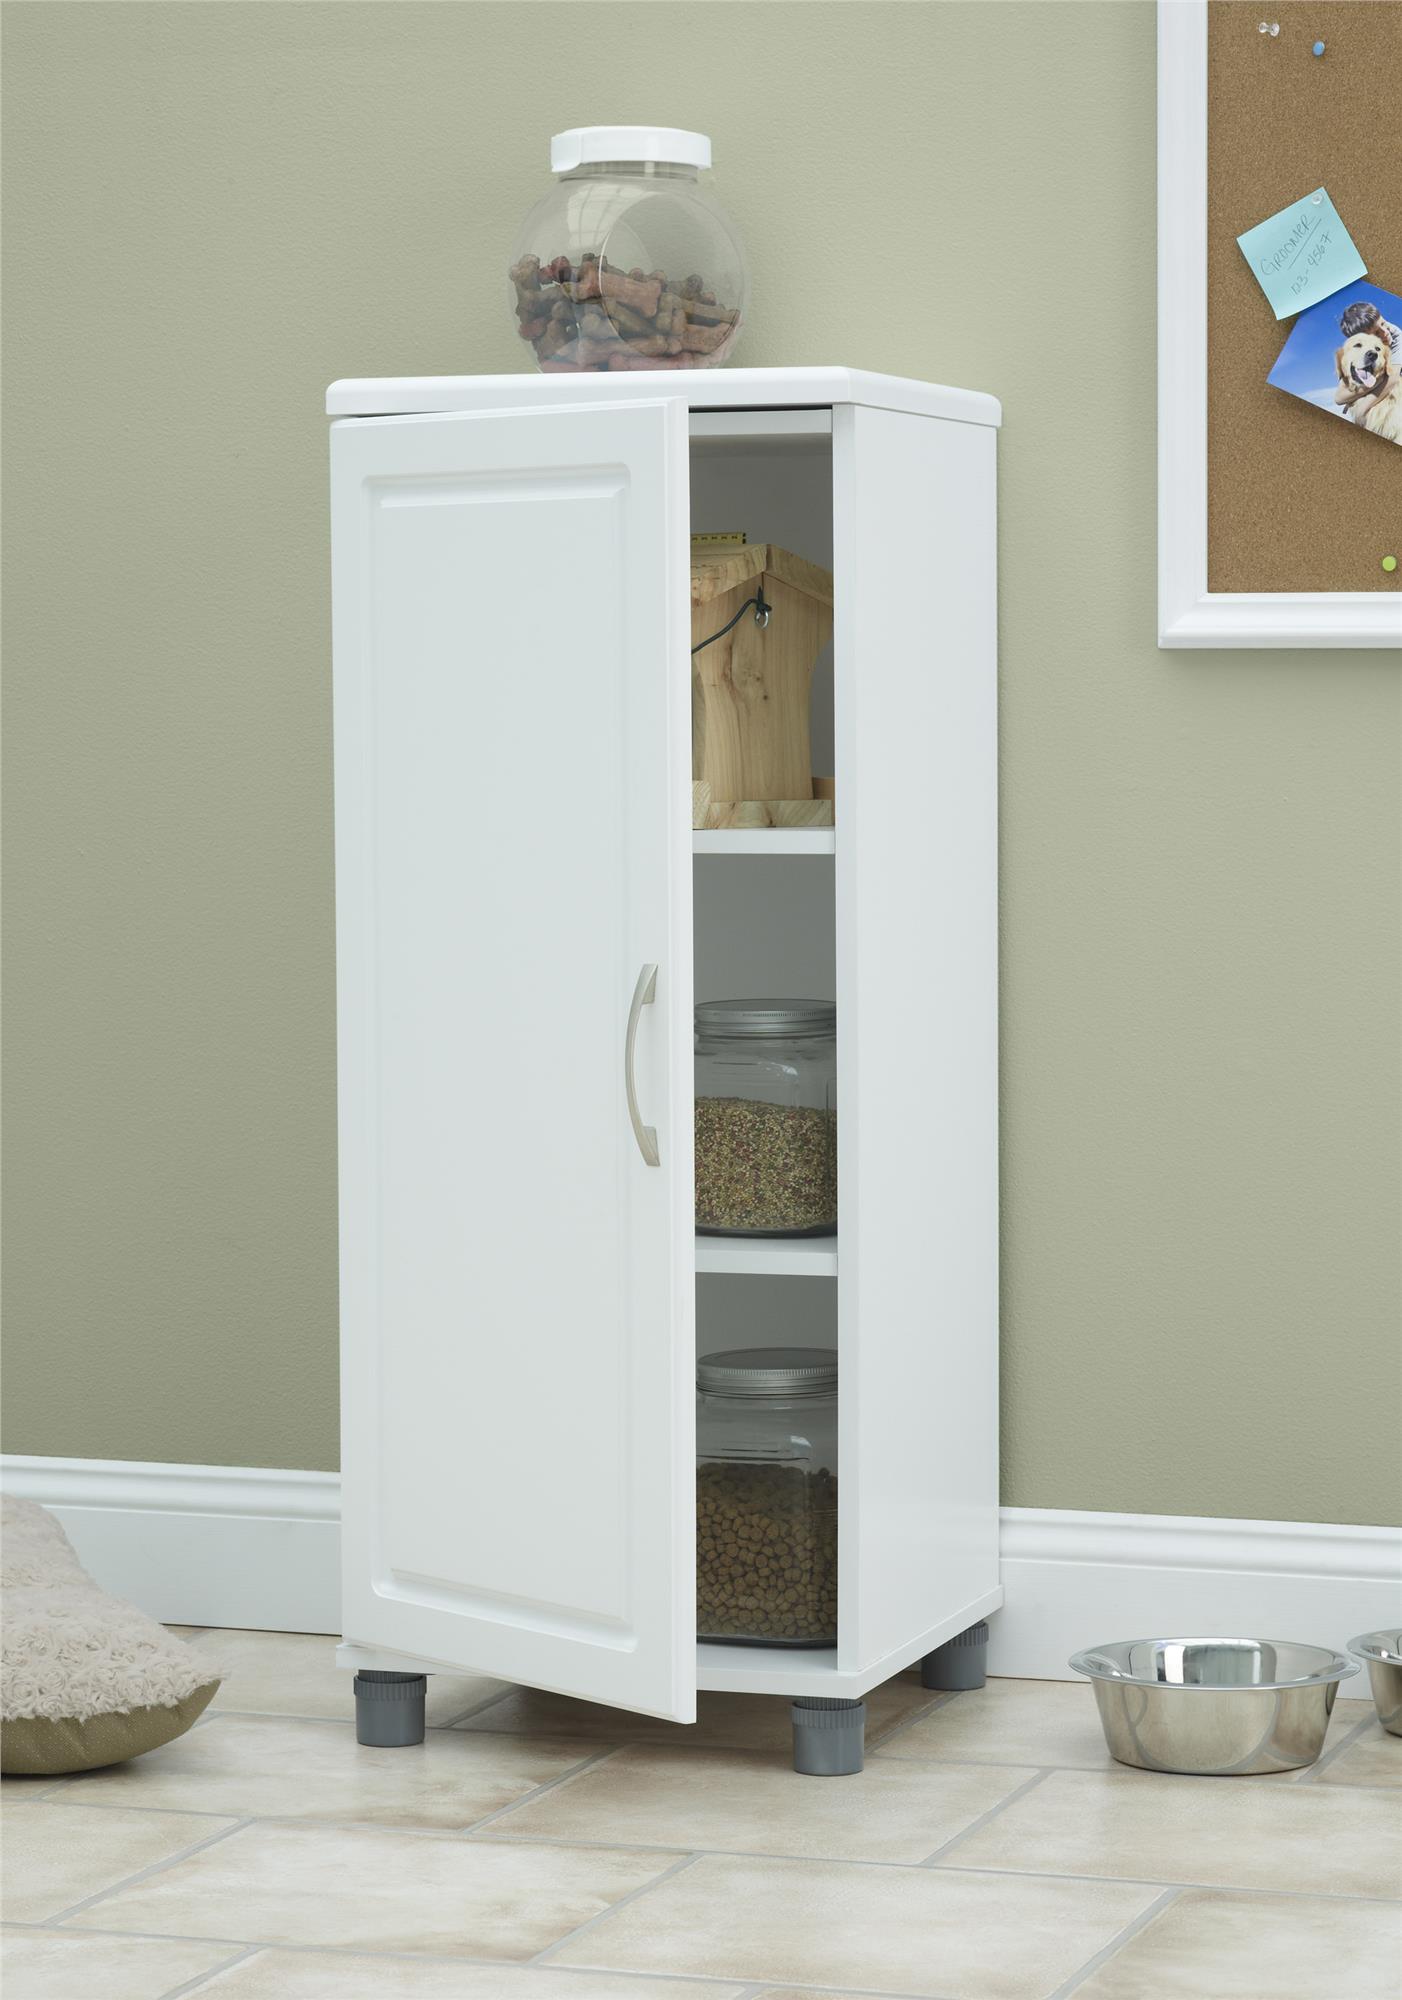 Systembuild Evolution Utility Storage Cabinet, White - image 3 of 15